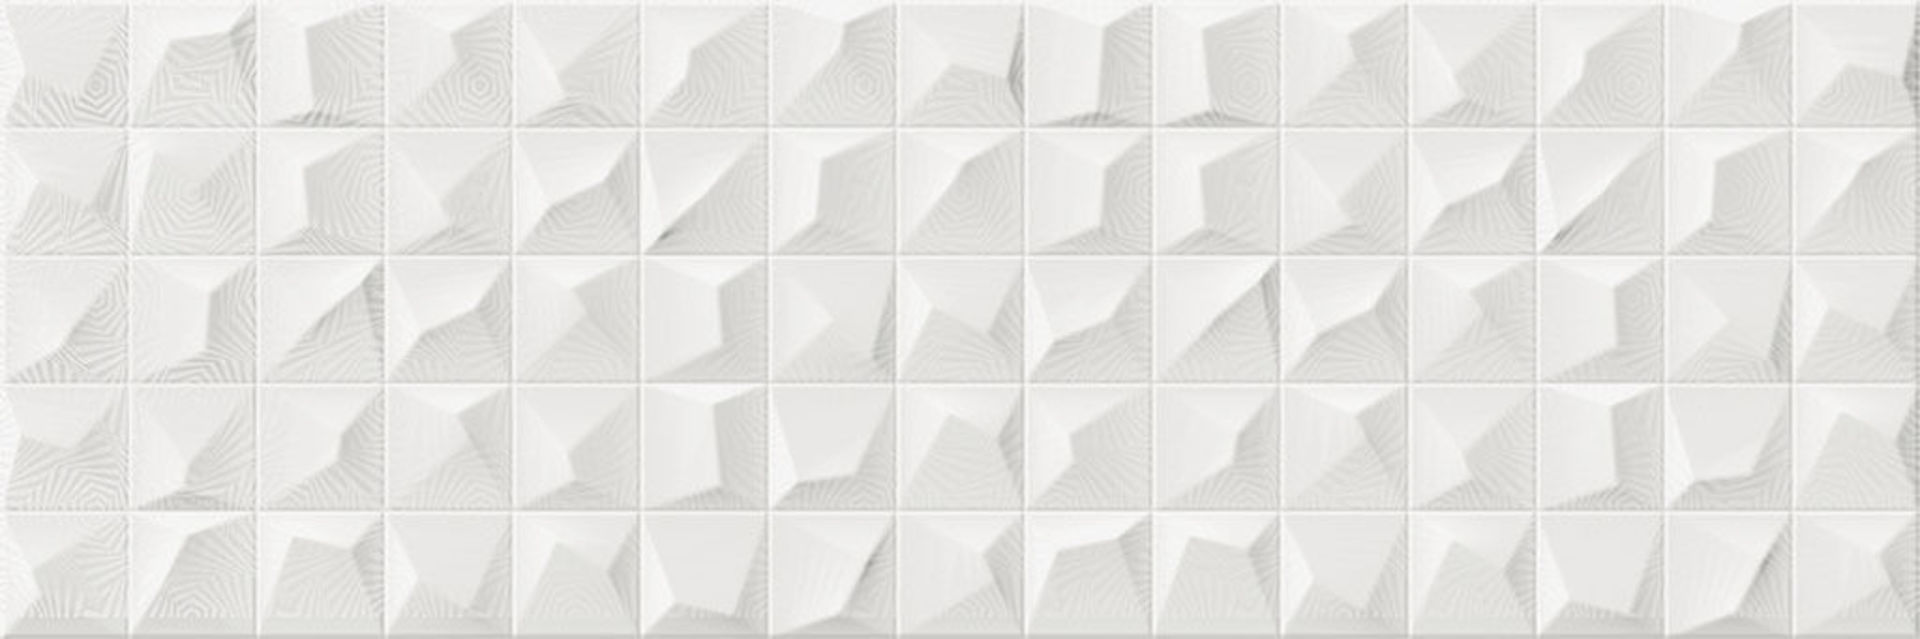 Керамическая плитка CROMATICA KLEBER WHITE BRILLO 25*75 / коллекция CROMATICA / производитель Cifre / страна Испания